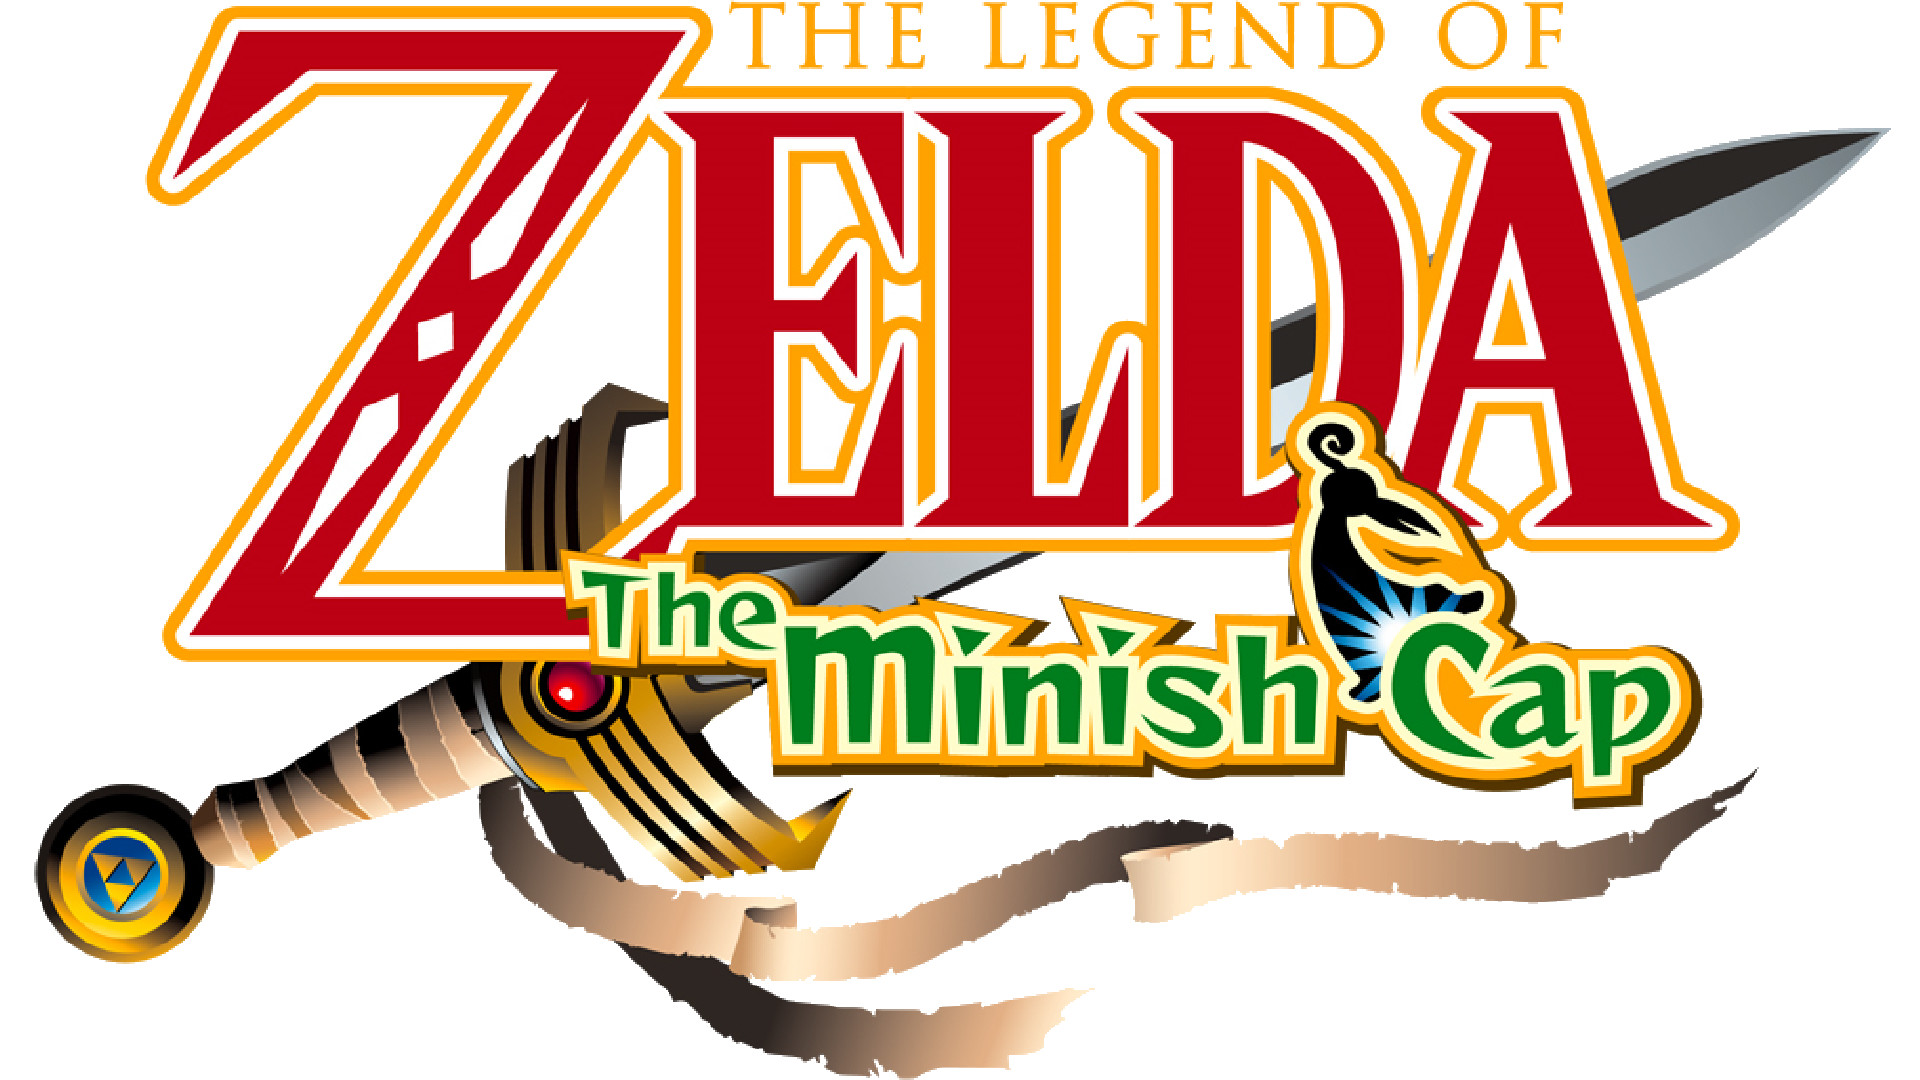 1920x1080 The Legend of Zelda: The Minish Cap